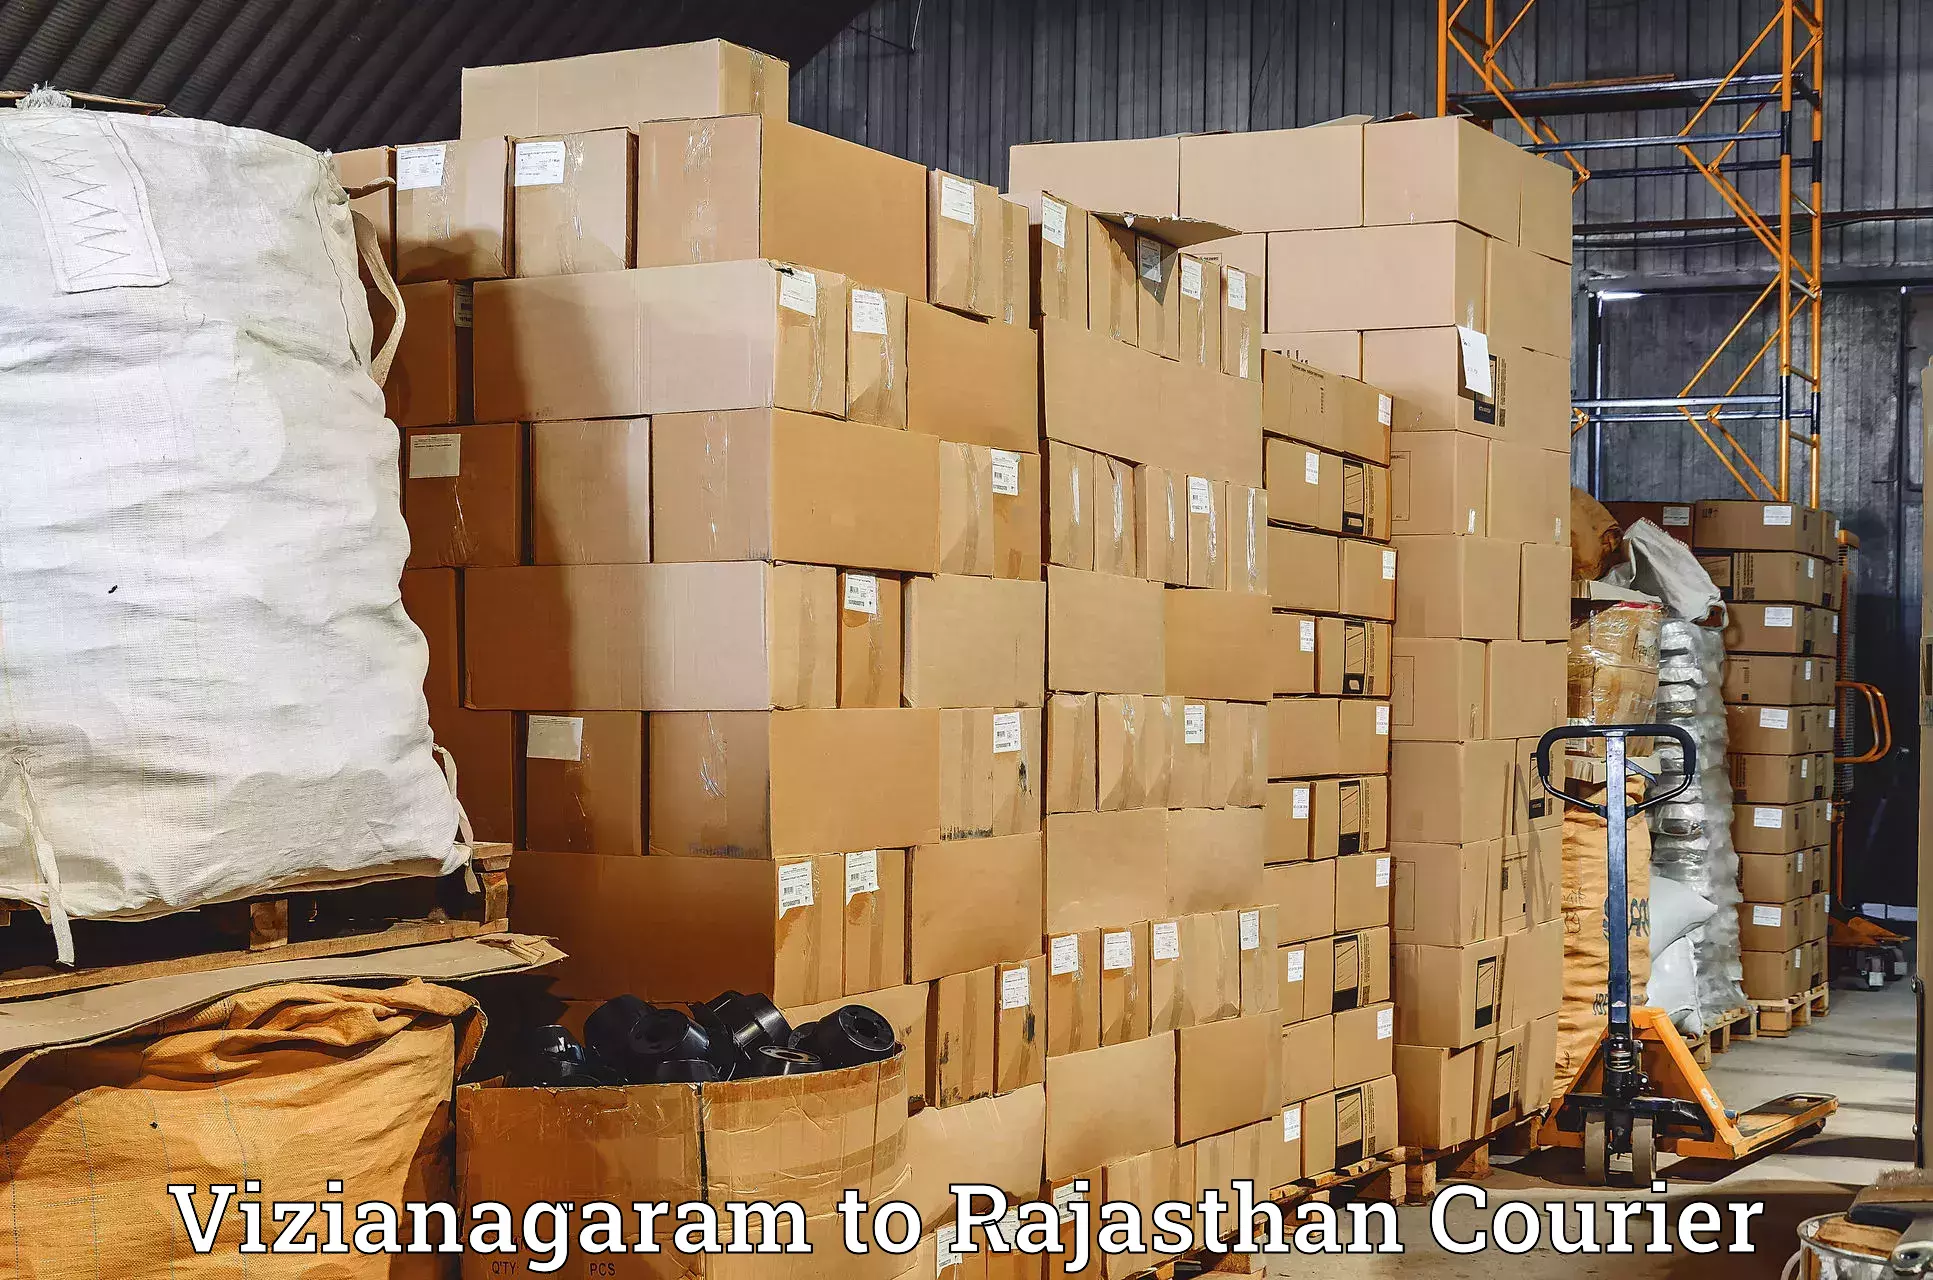 Next-day delivery options Vizianagaram to Jaipur